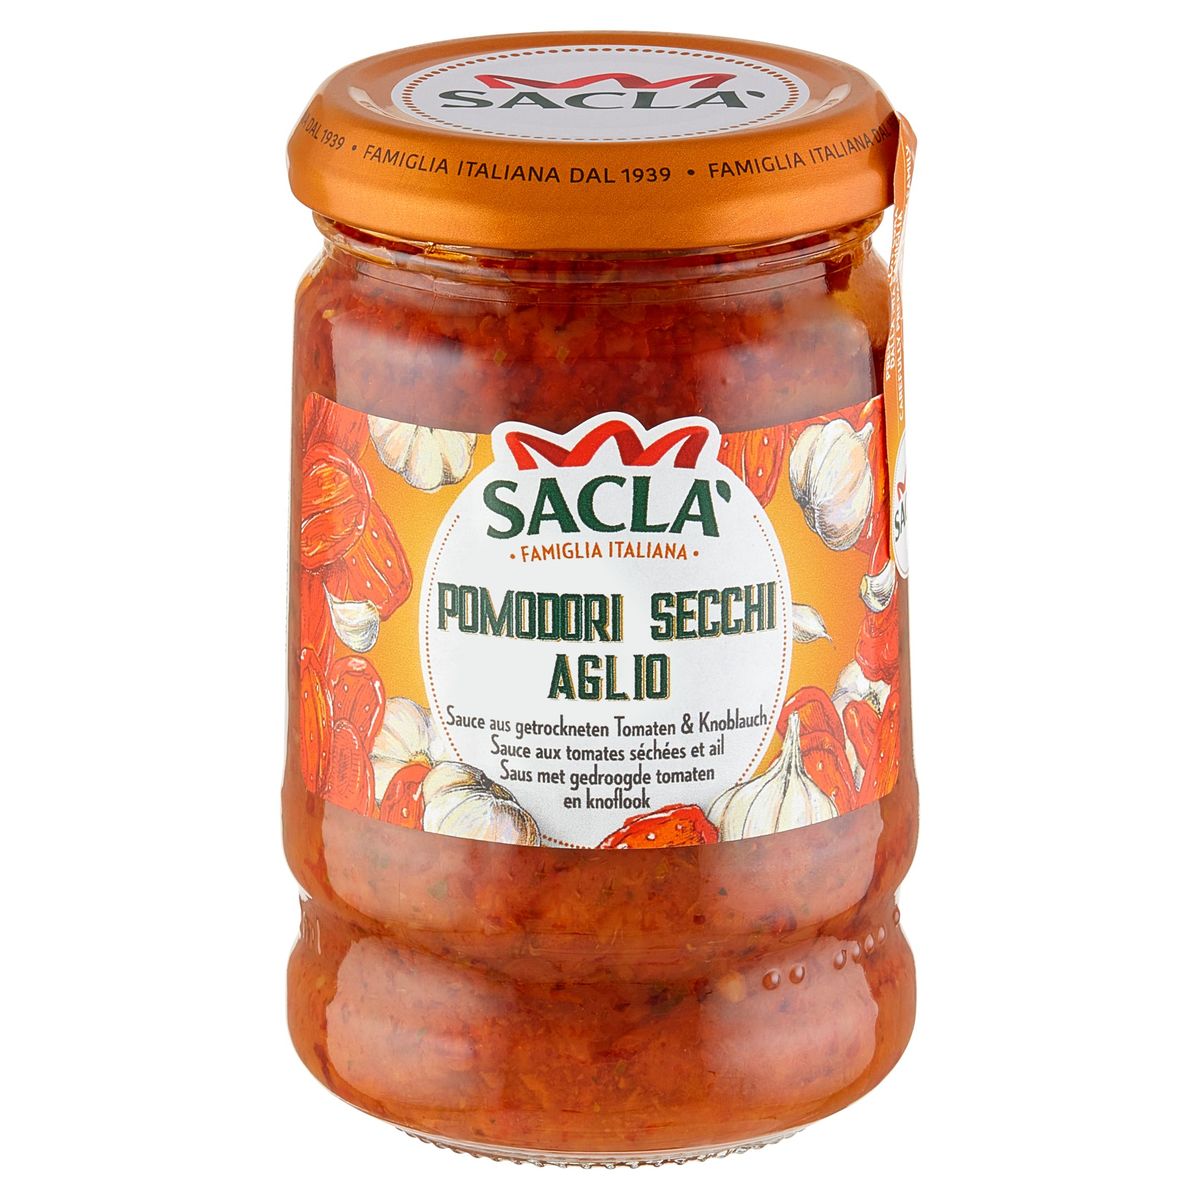 Sacla Pomodori Secchi Aglio Saus Gedroogde Tomaten en Knoflook 190 g